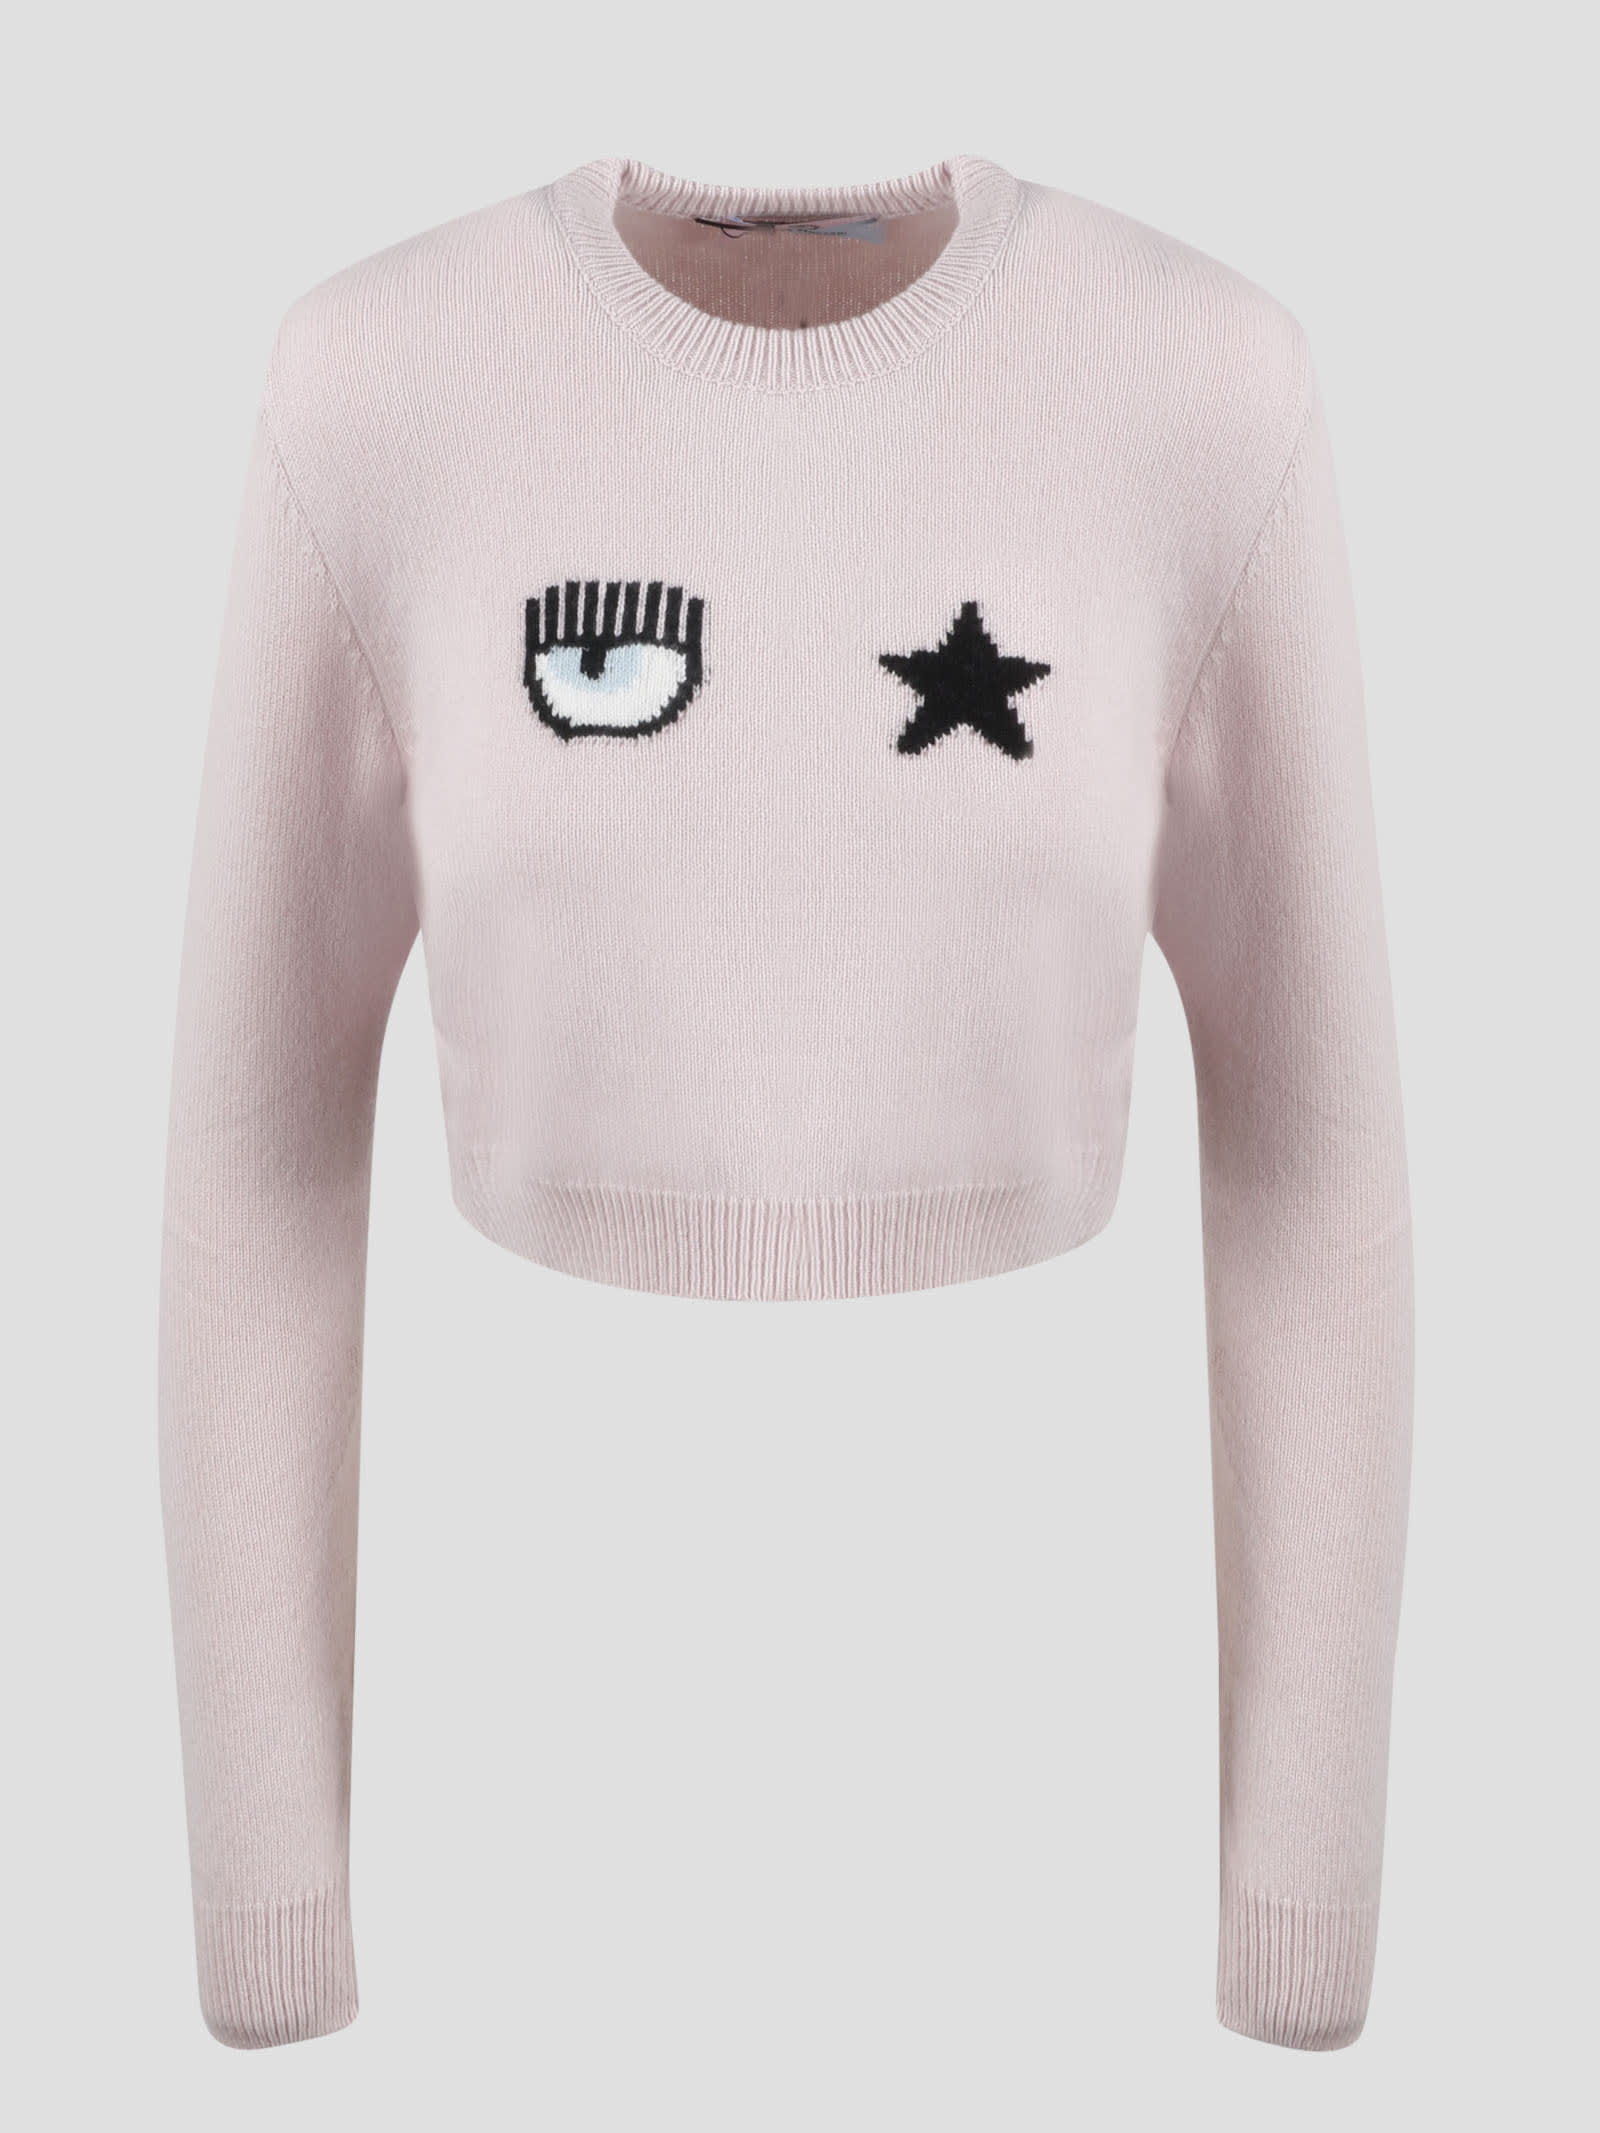 Chiara Ferragni Eyestar Crop Sweater